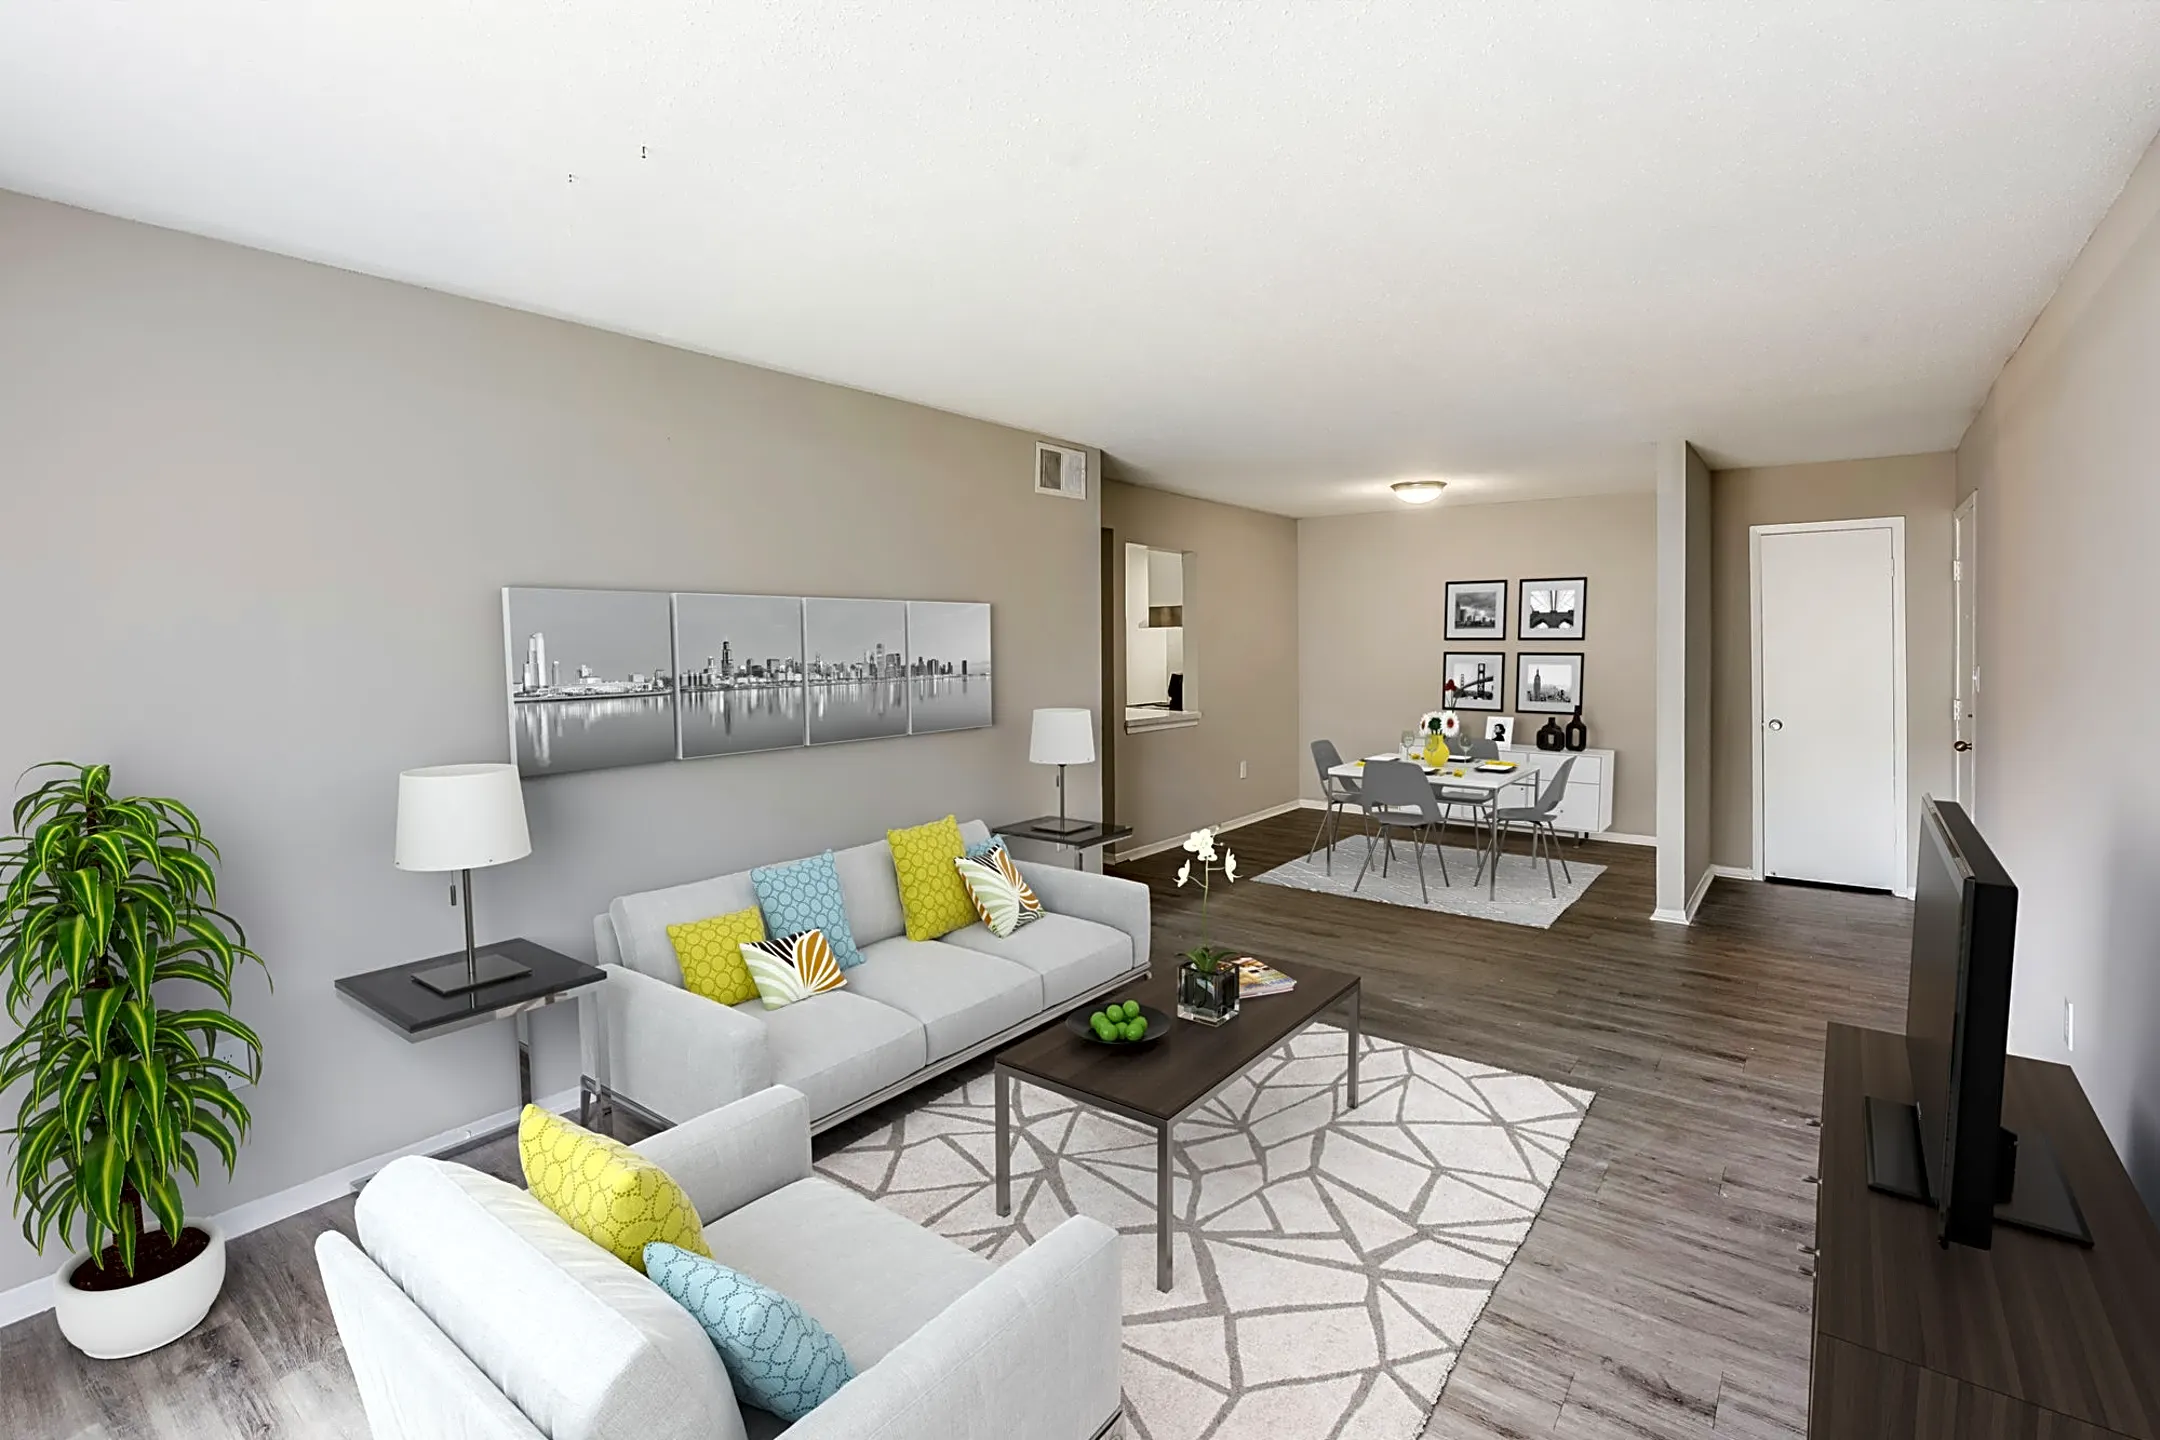 Living Room - Madison Park Apartments - Ridgeland, MS